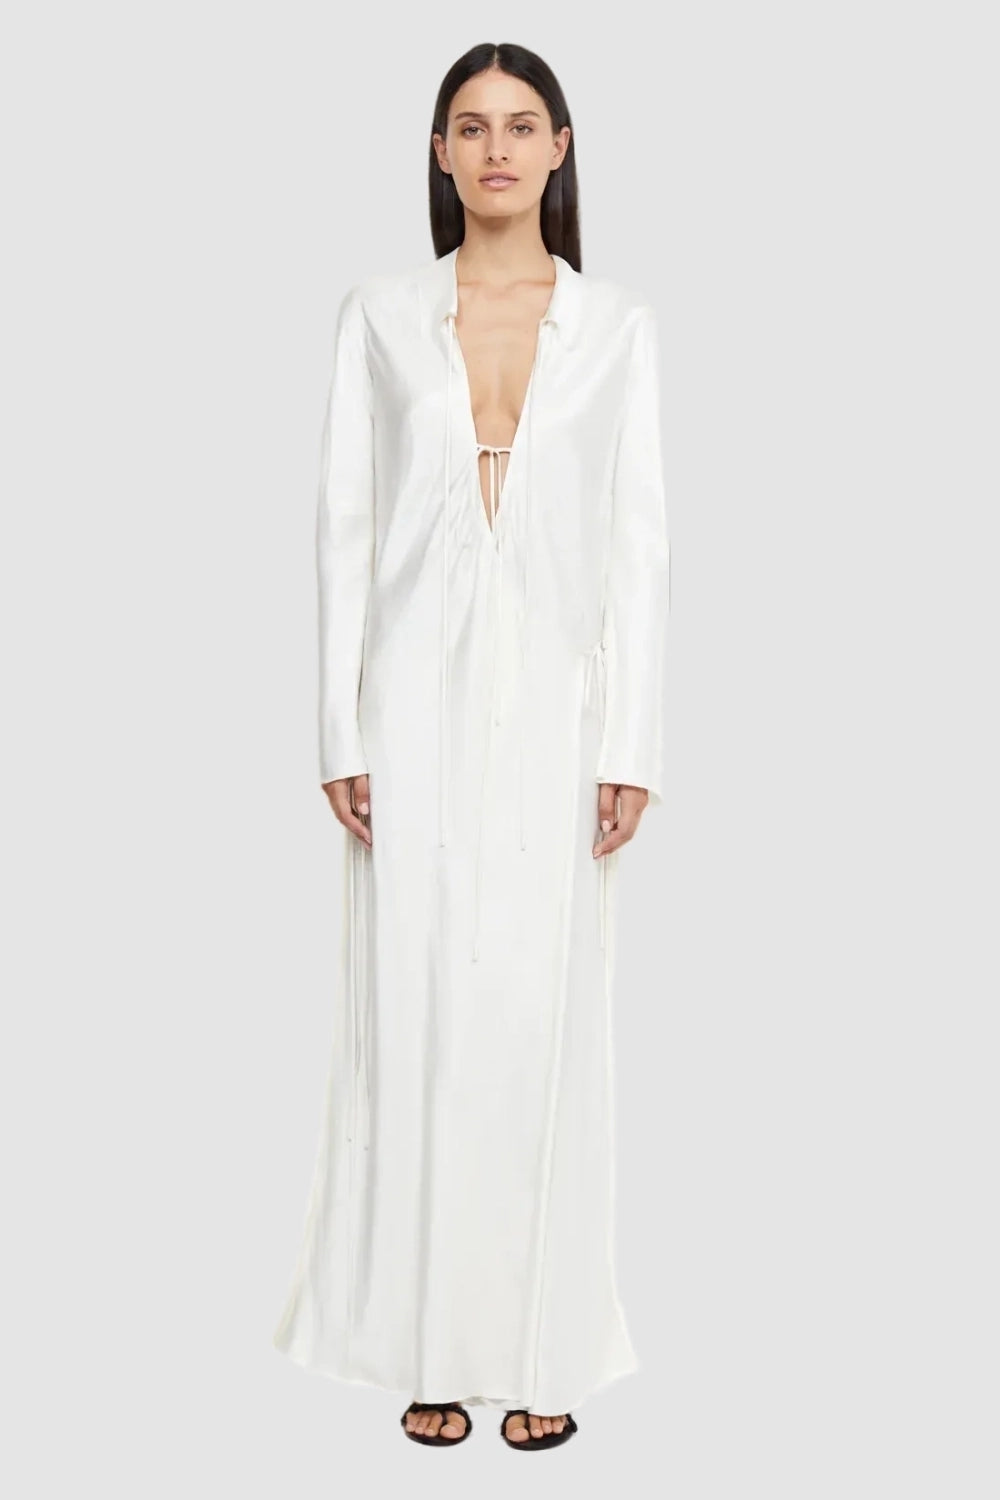 Untamed White Dress